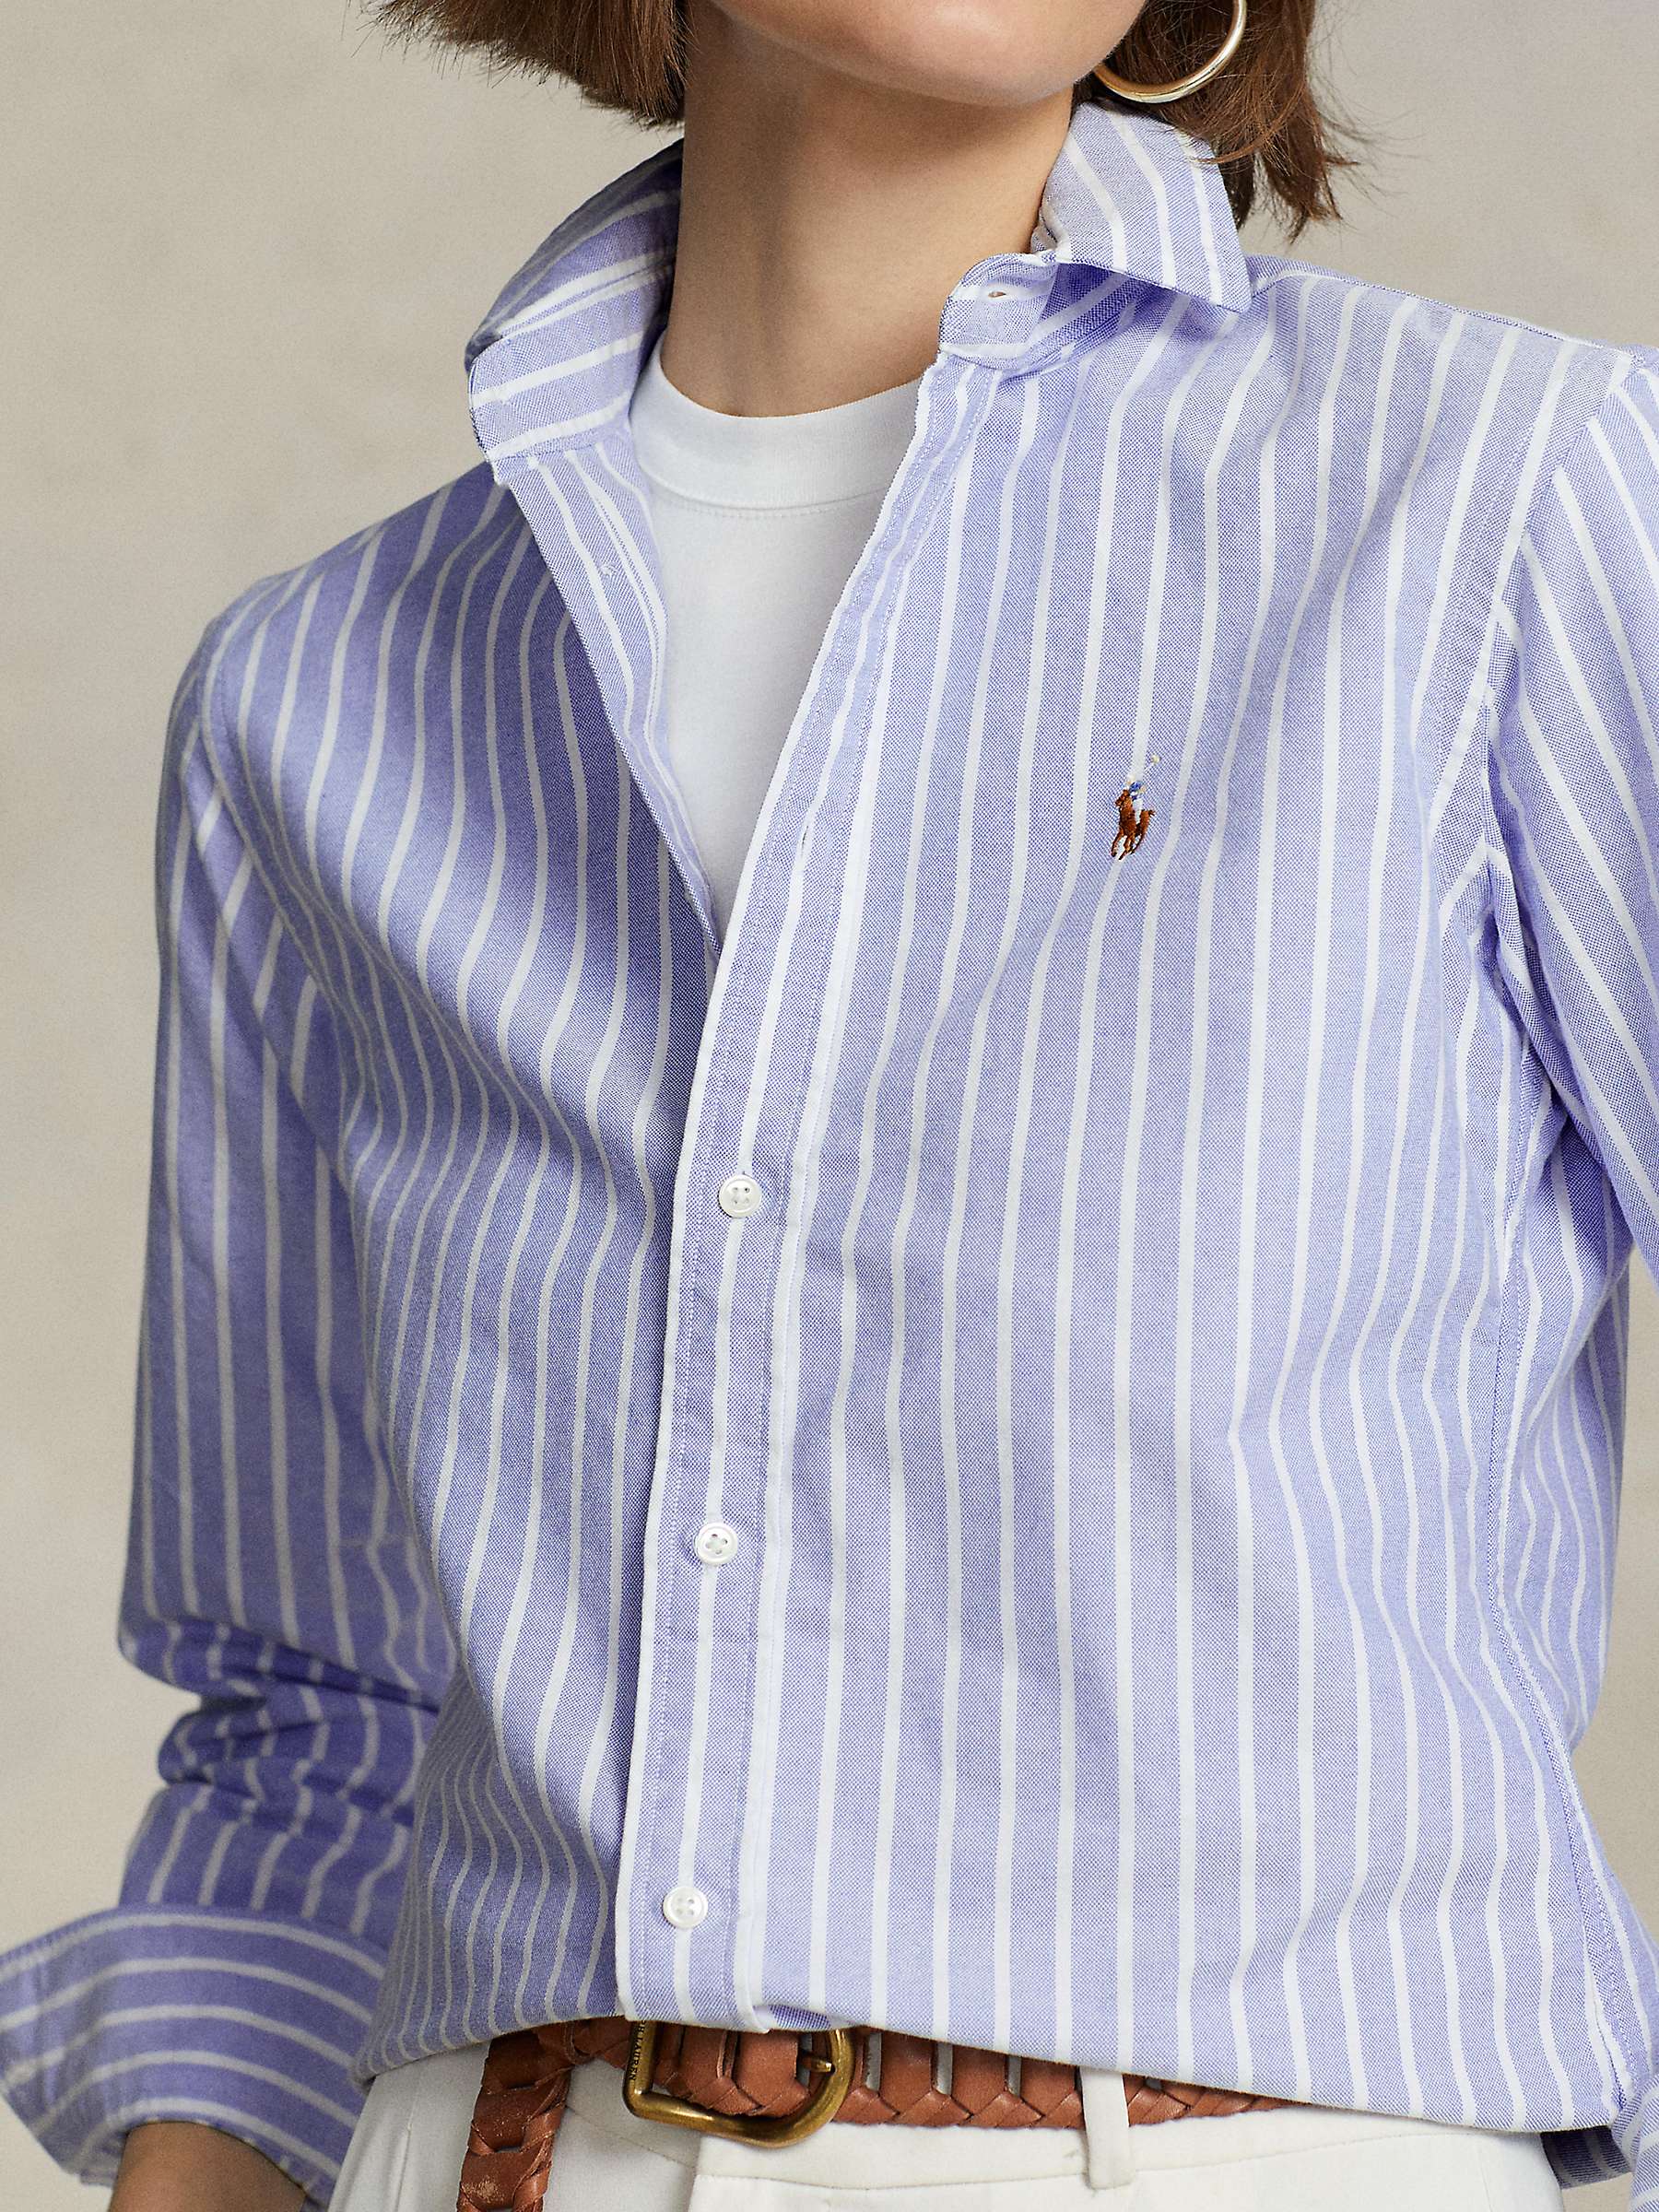 Buy Polo Ralph Lauren Striped Cotton Shirt, Island Blue/White Online at johnlewis.com